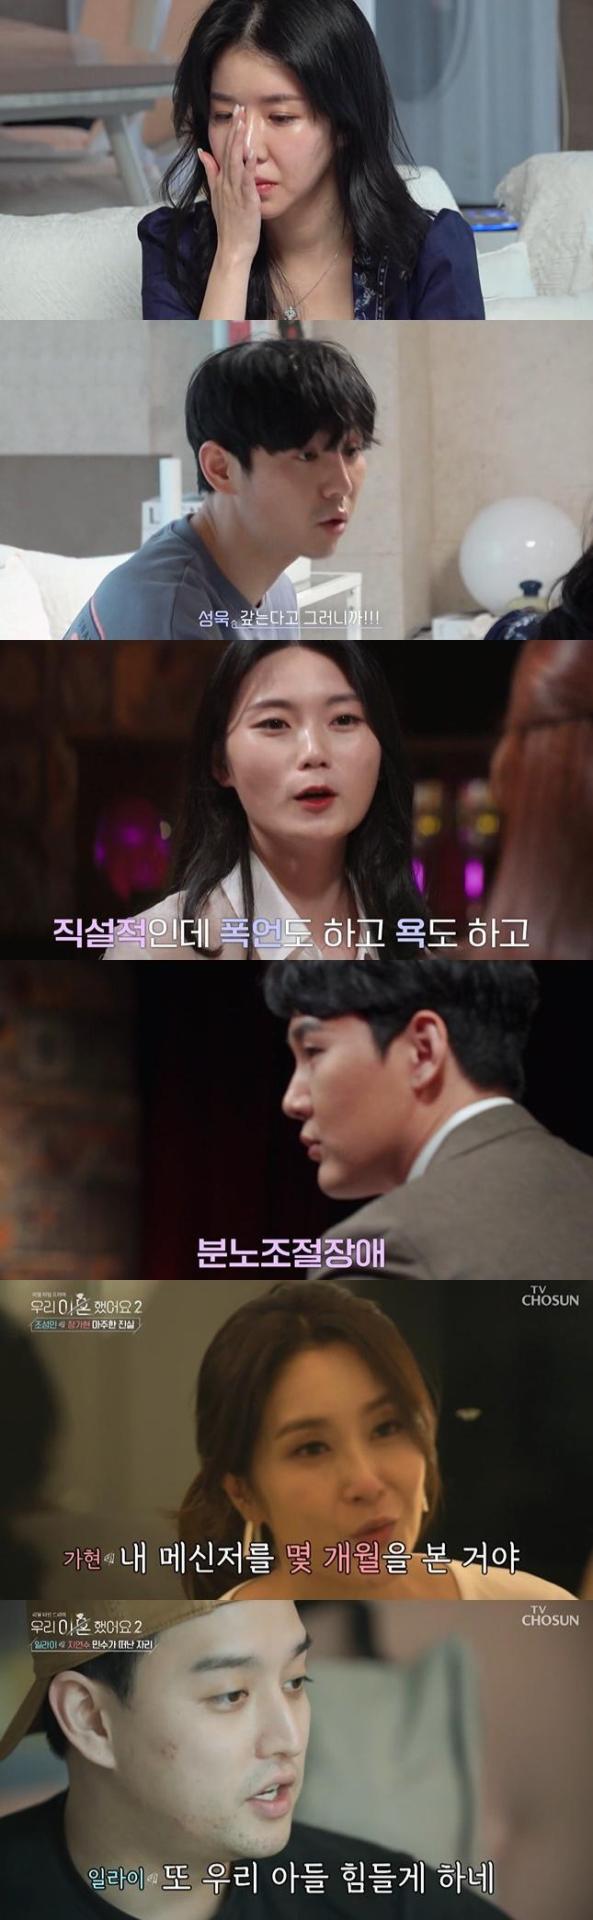 Udivorce2  marriage and divorce Home feud entertainment, is it okay?Source: k-star-holic.blogspot.com #We Got Divorced #Ji Yeon-soo#Eli